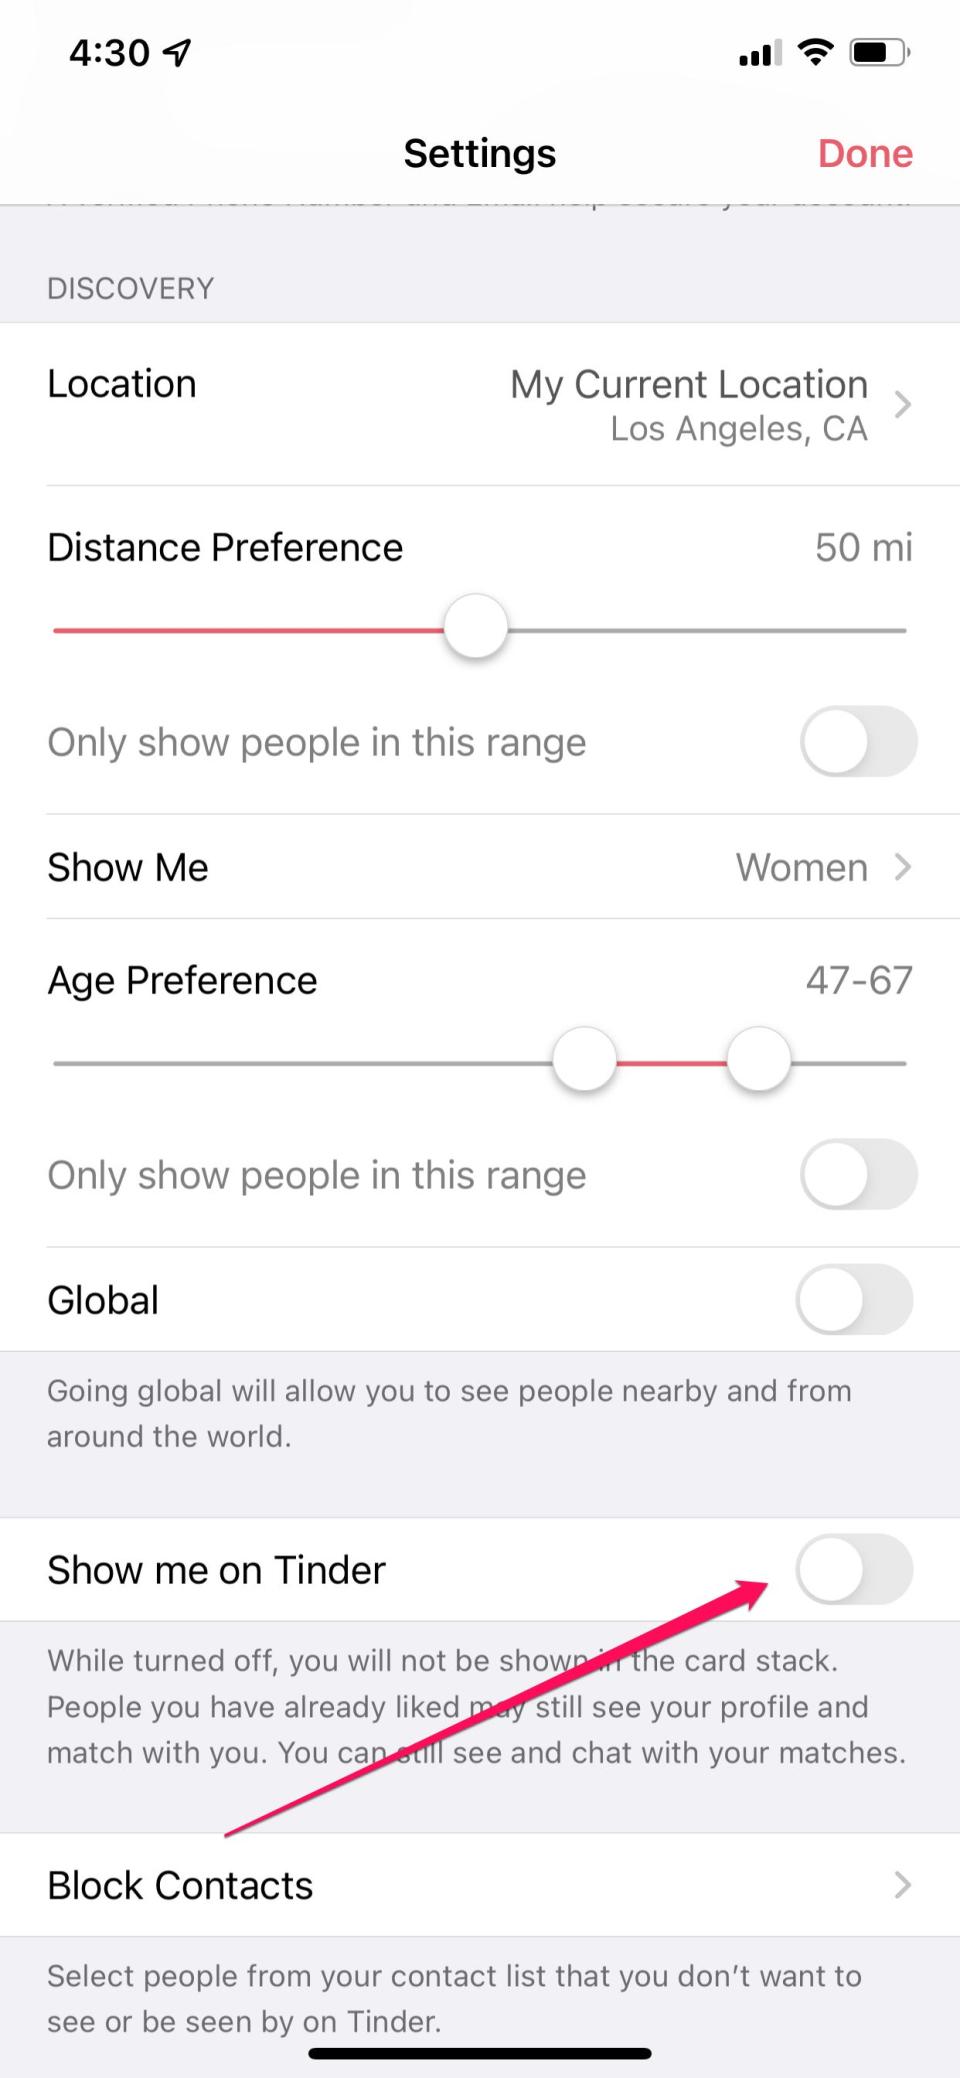 Tinder app's settings in iOS.